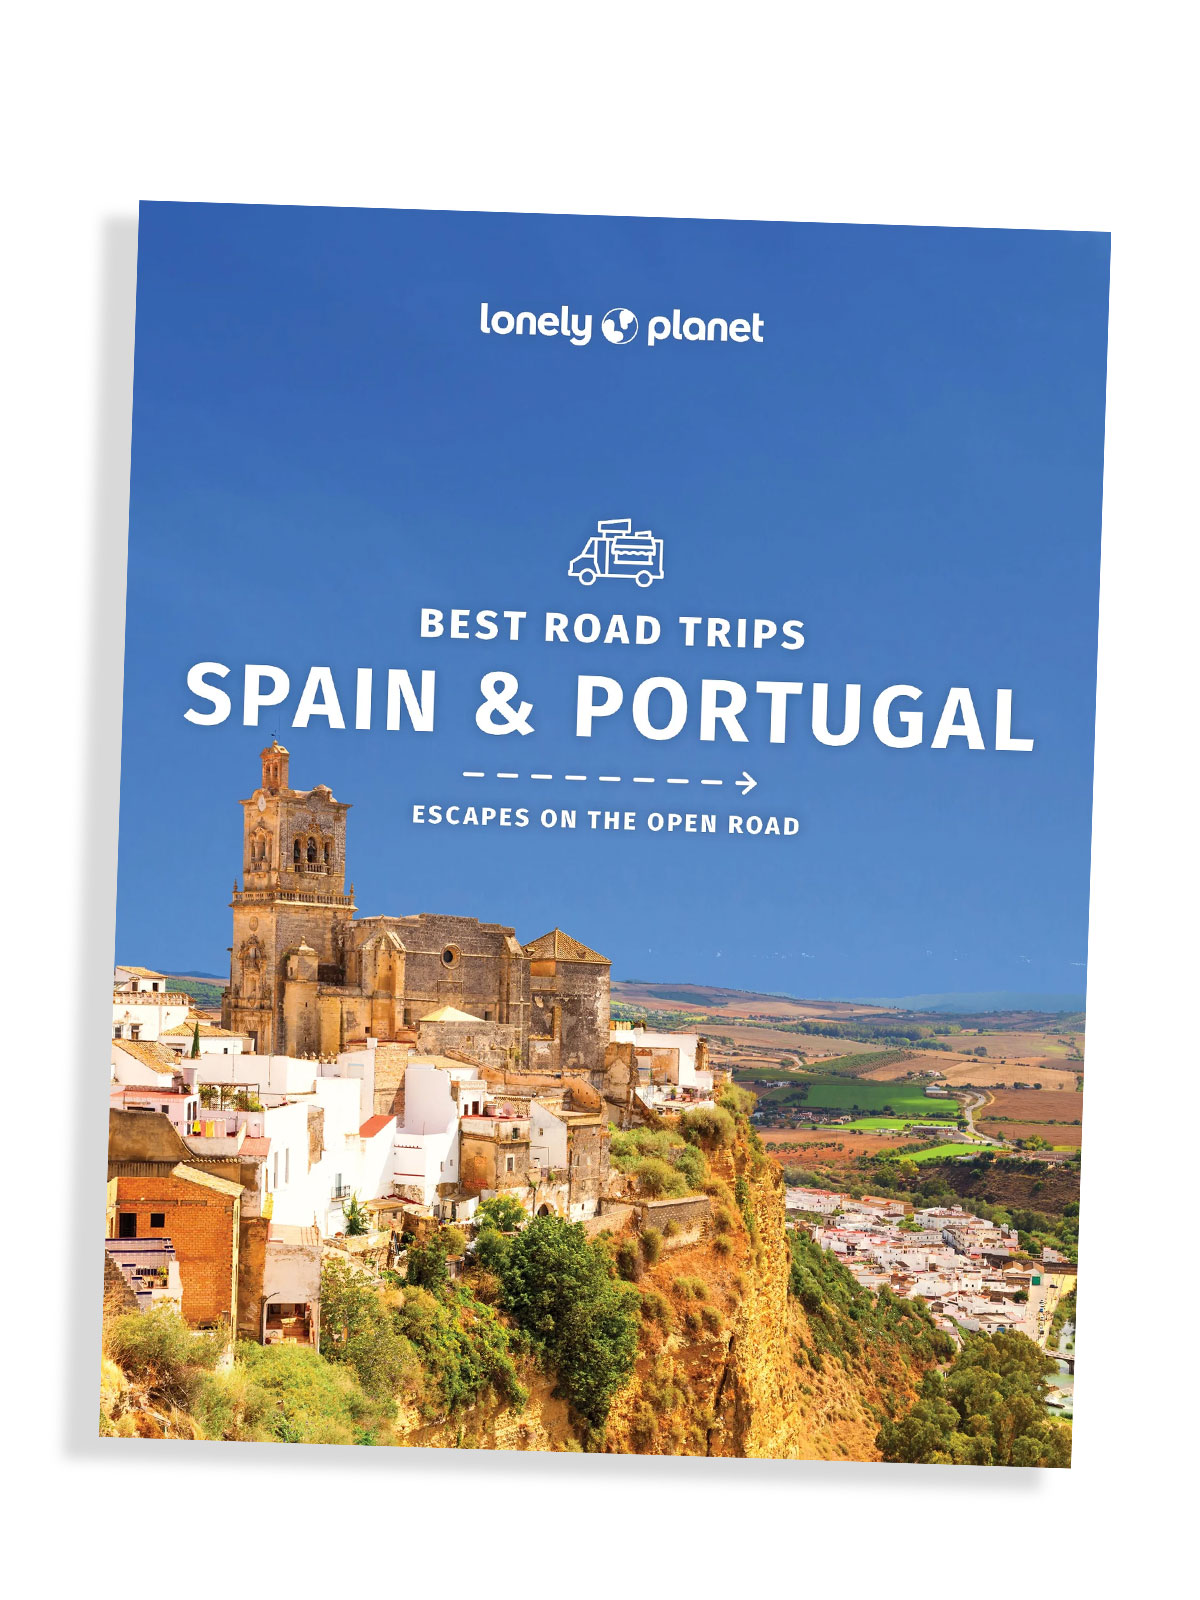 Best Road Trips - Spain & Portugal